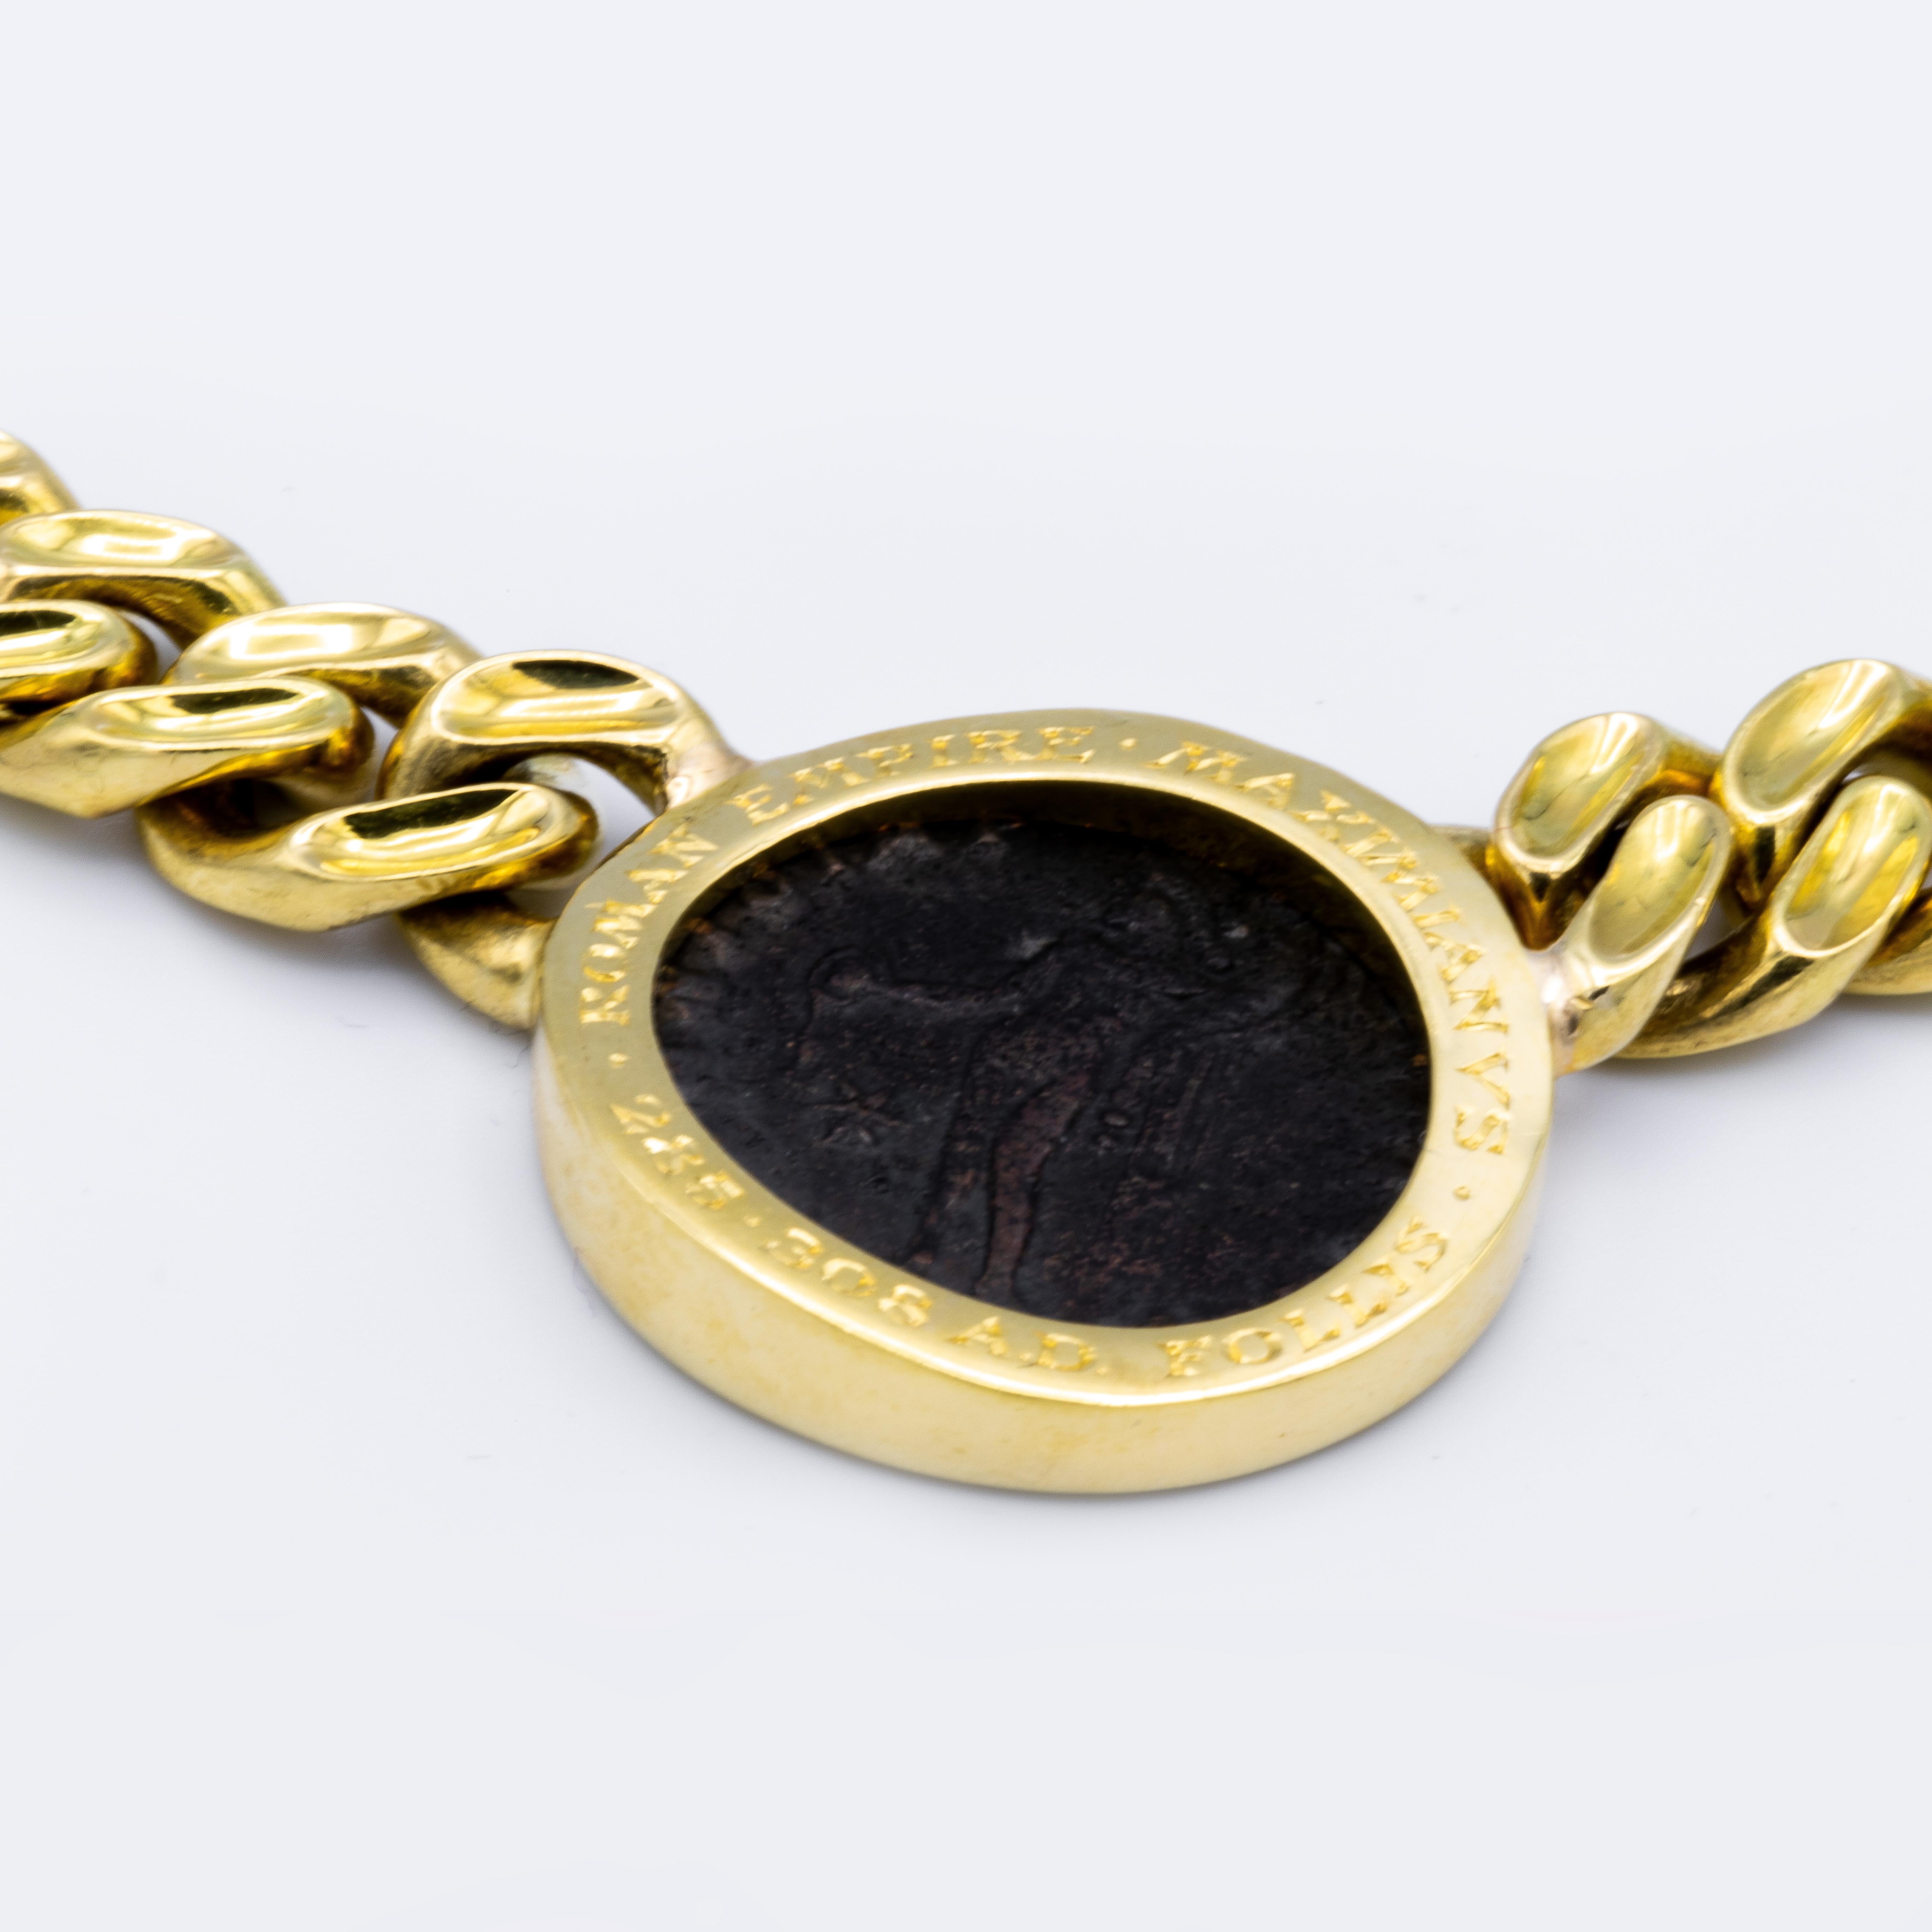 Classical Roman Bvlgari 18 Karat Yellow Gold Roman Empire Coin Necklace